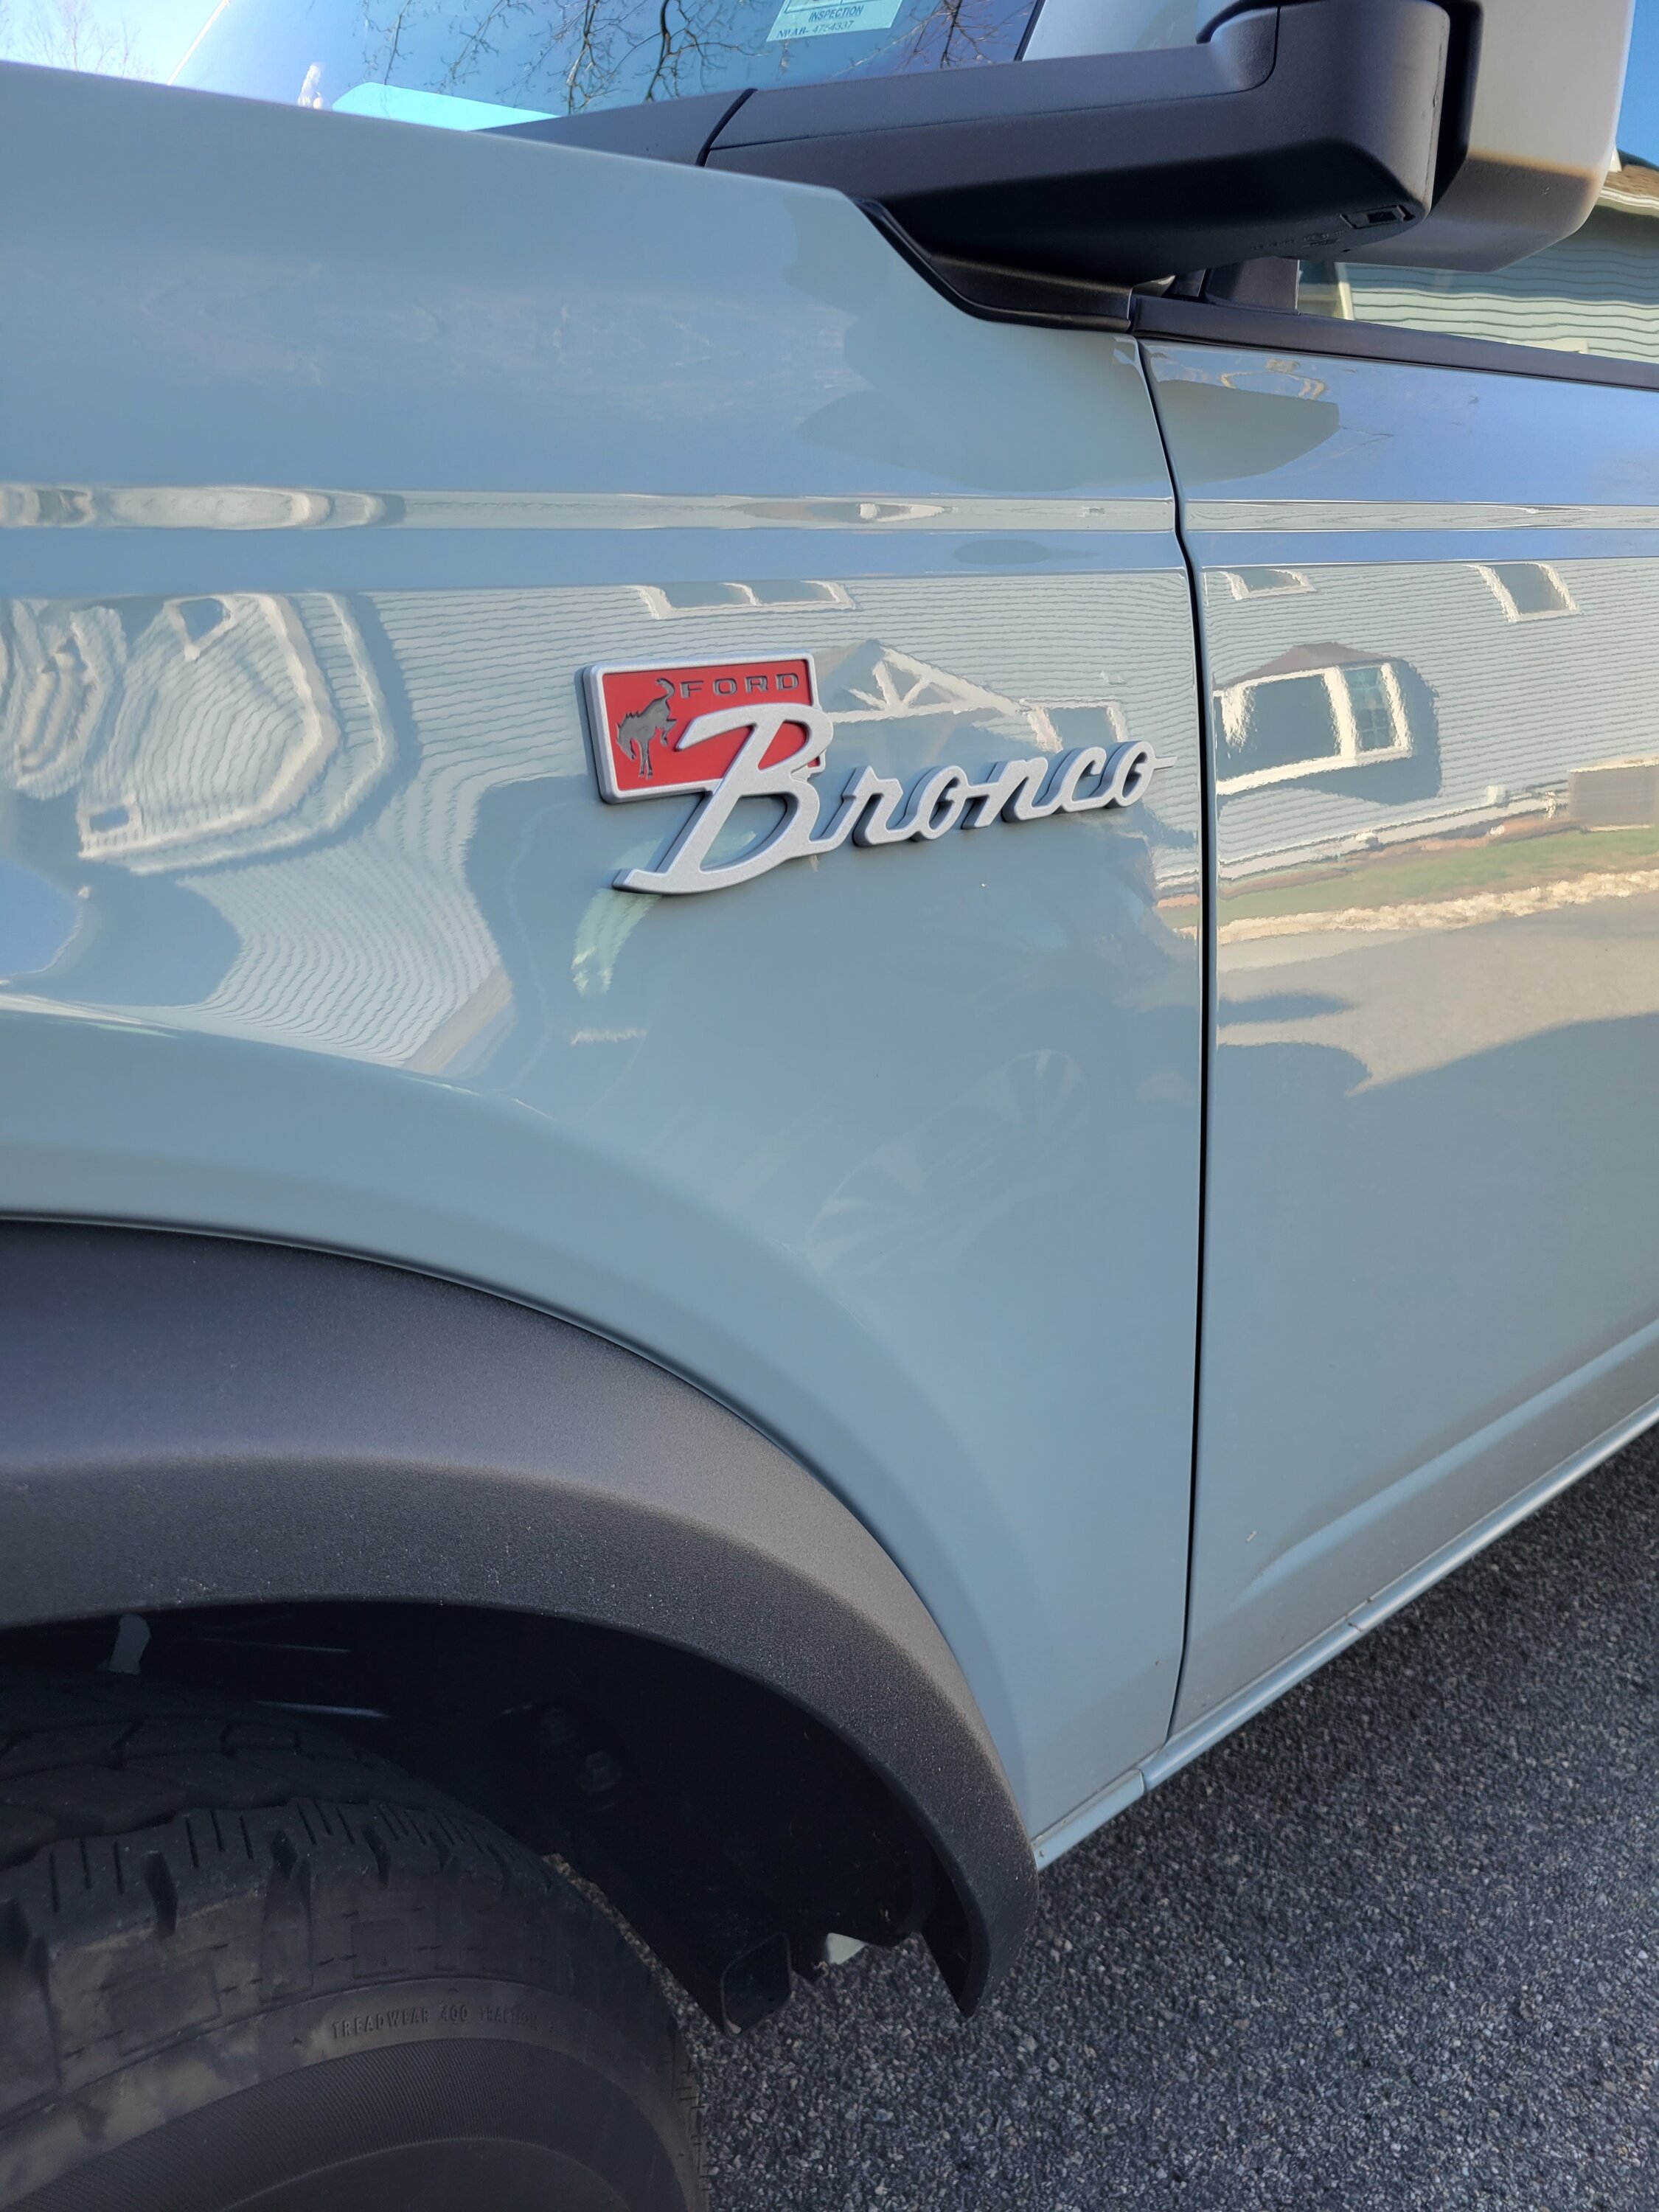 Ford Bronco CACTUS GRAY Bronco Club Badge pic1